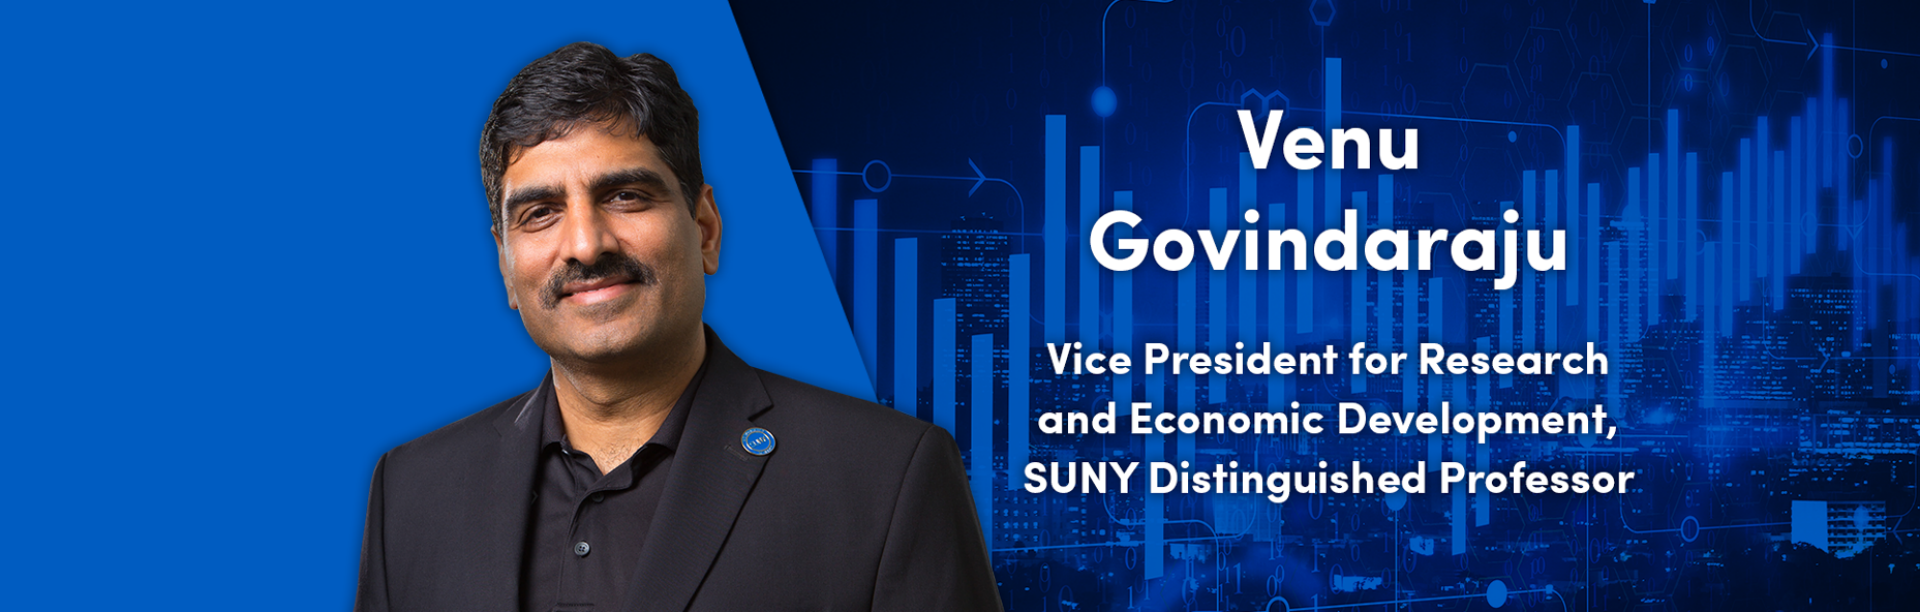 Venu Govindaraju, PhD Vice President for Research and Economic Development. 